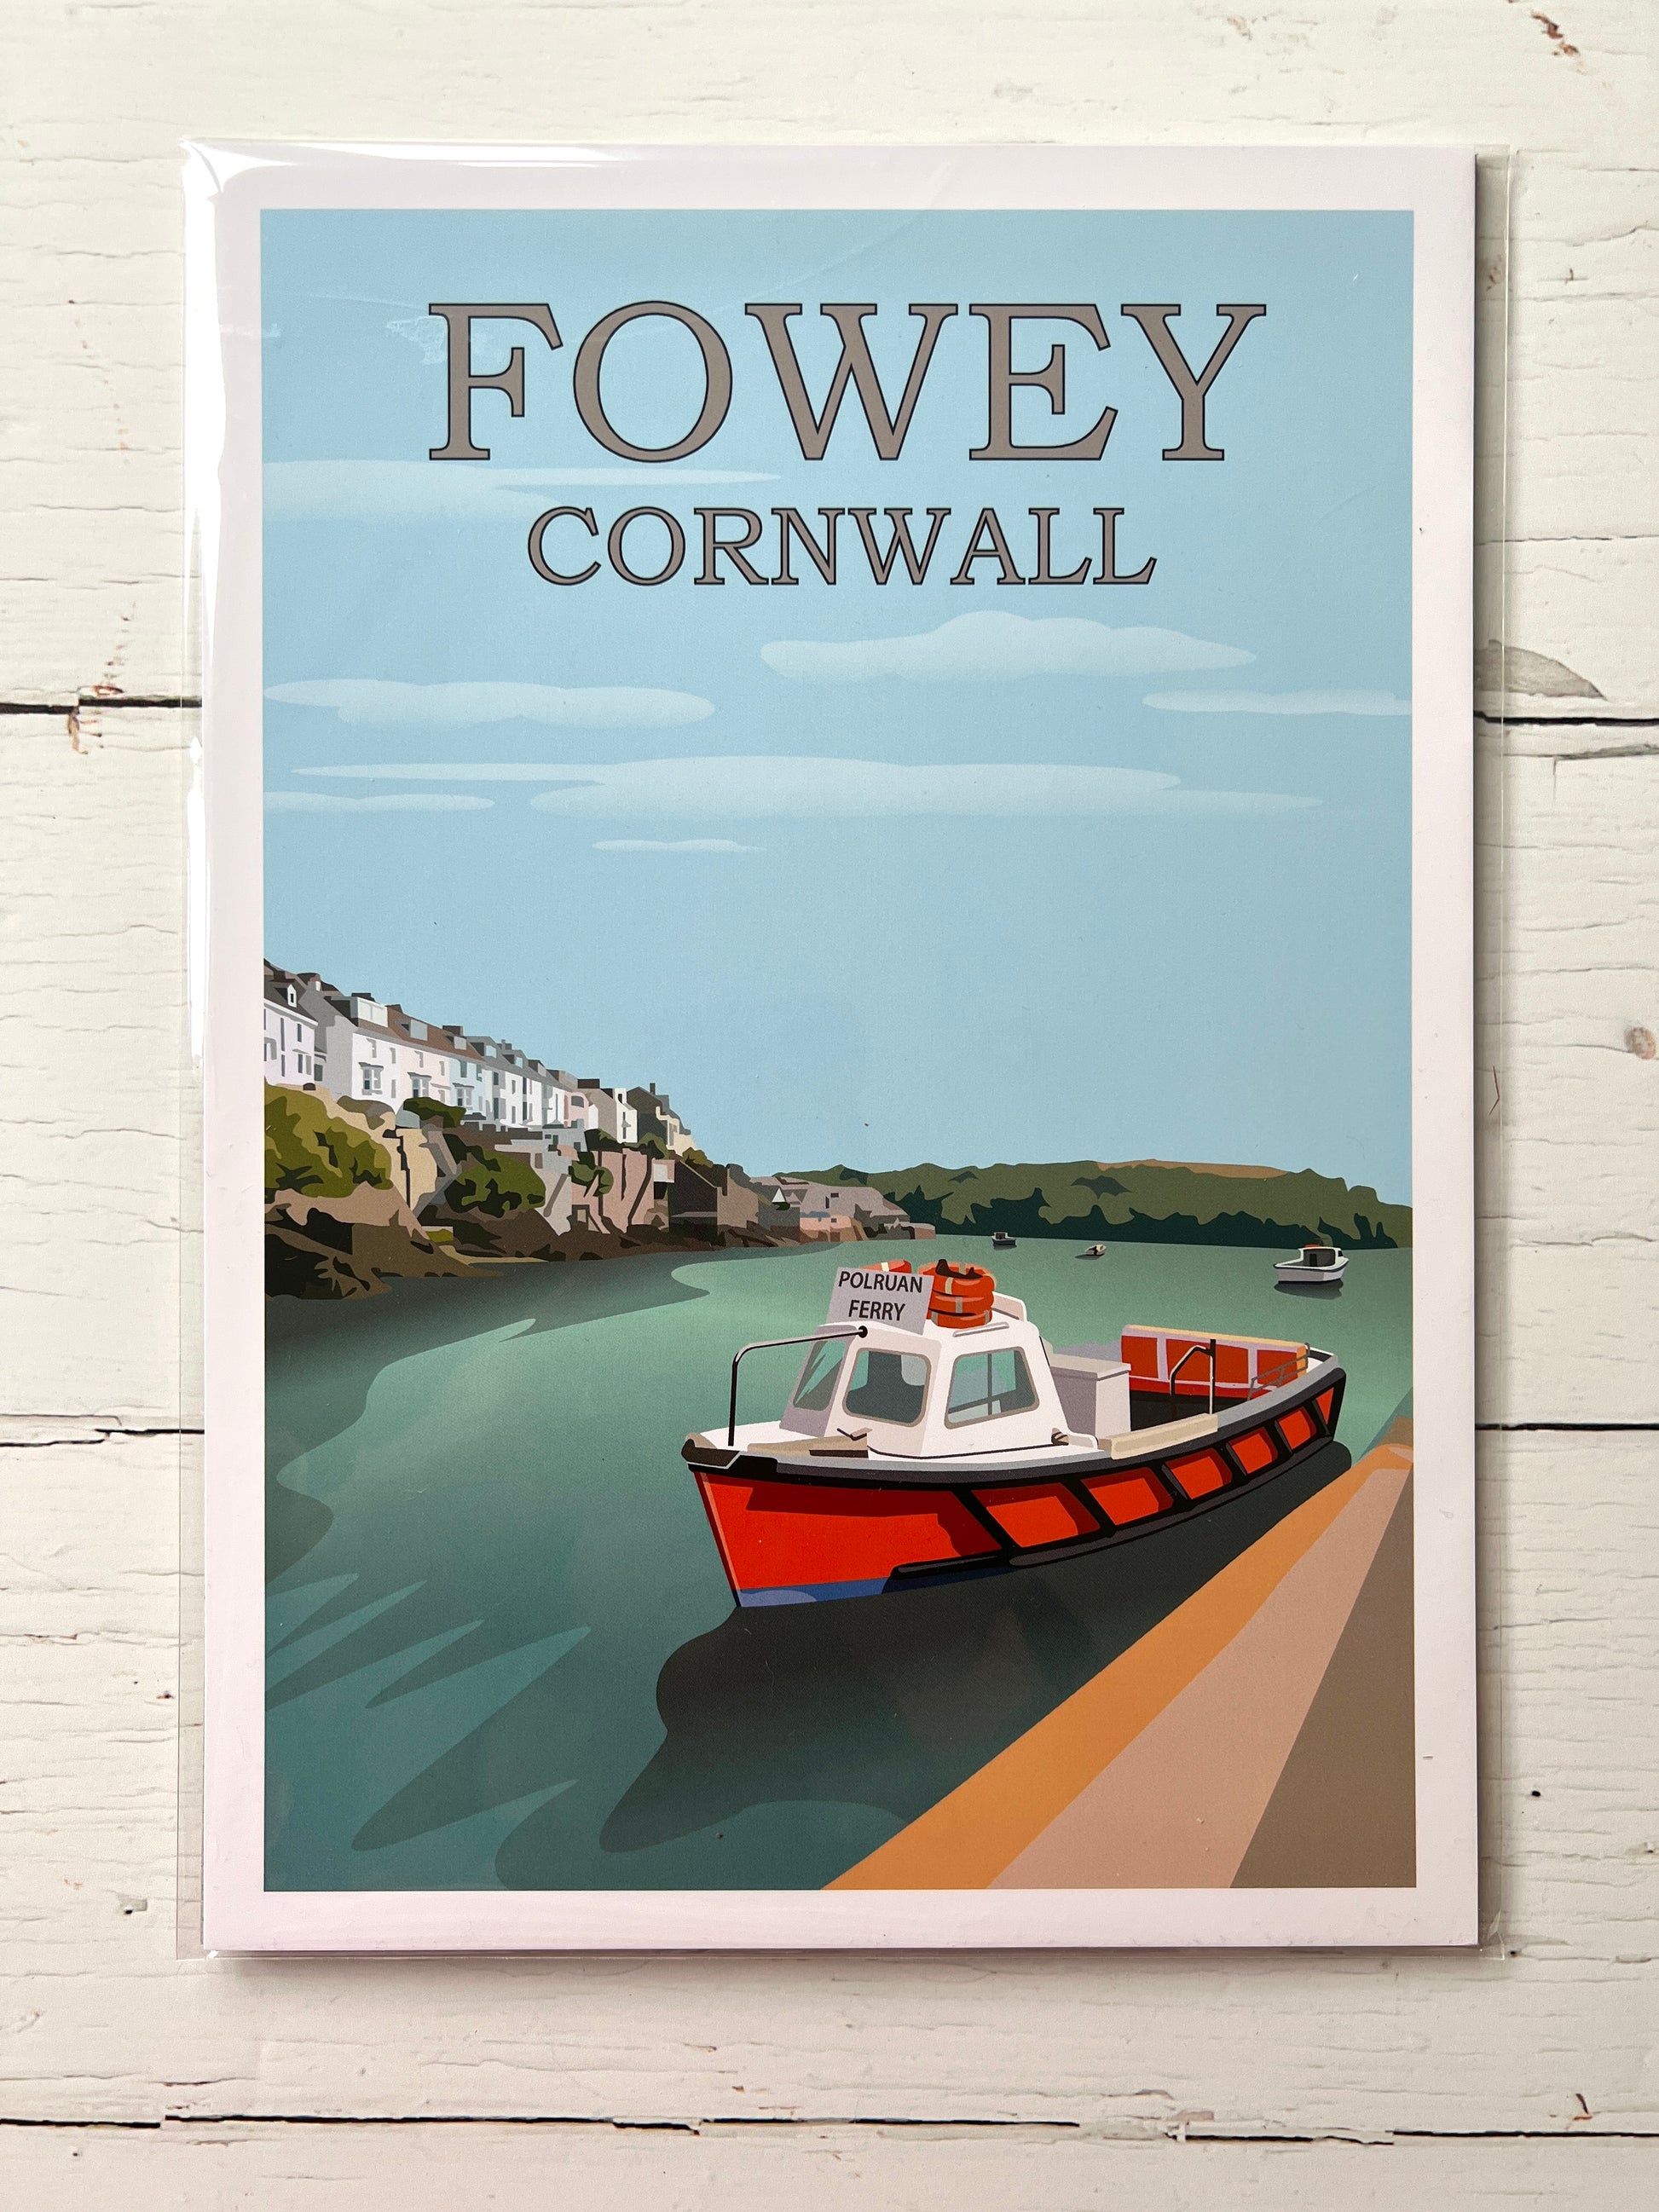 Fowey Cornwall Digital Art Prints in A4 